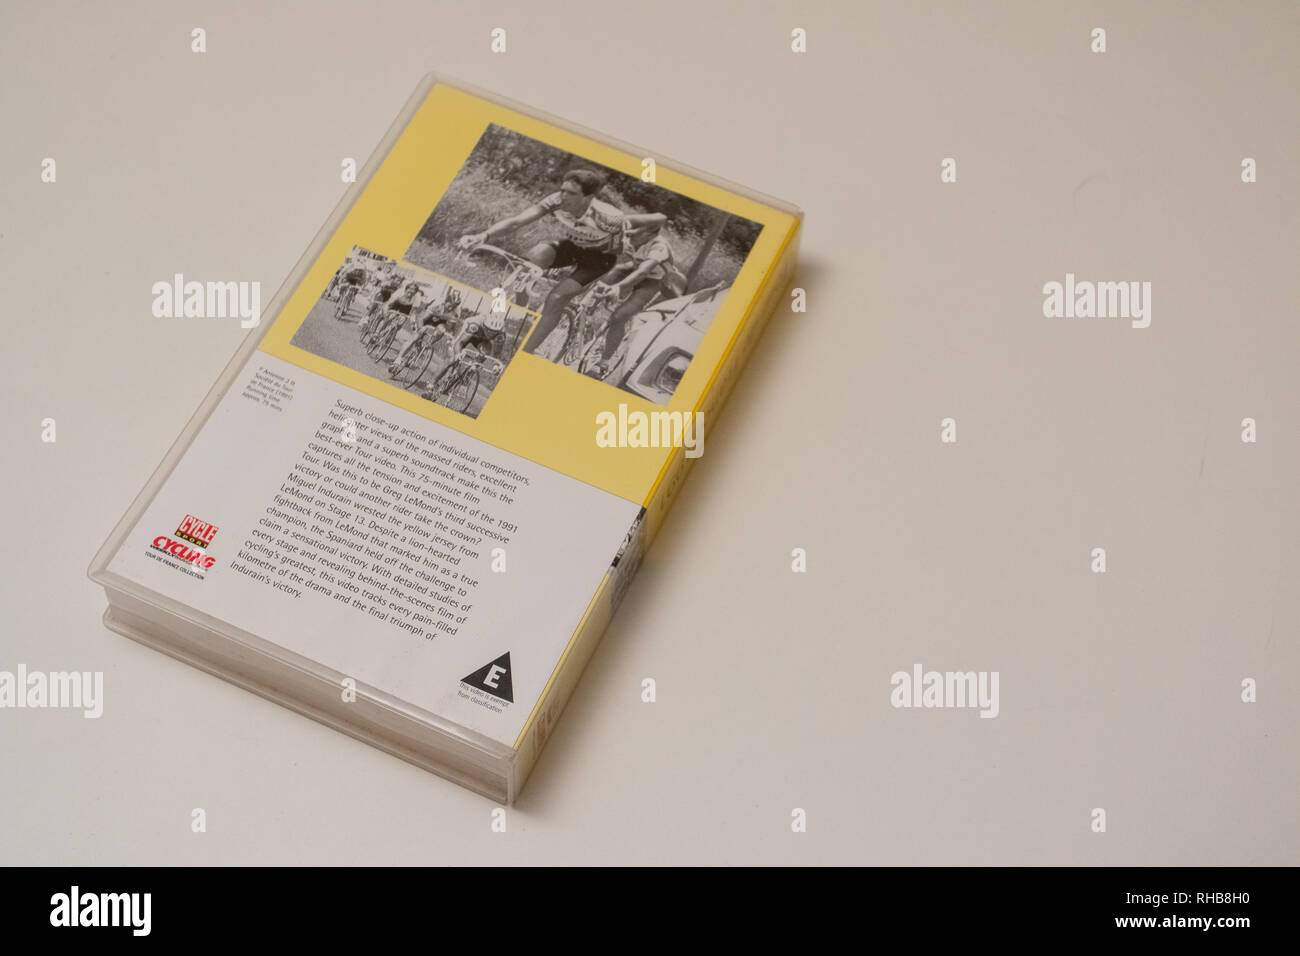 VHS tape of the 1991 Tour de France Stock Photo